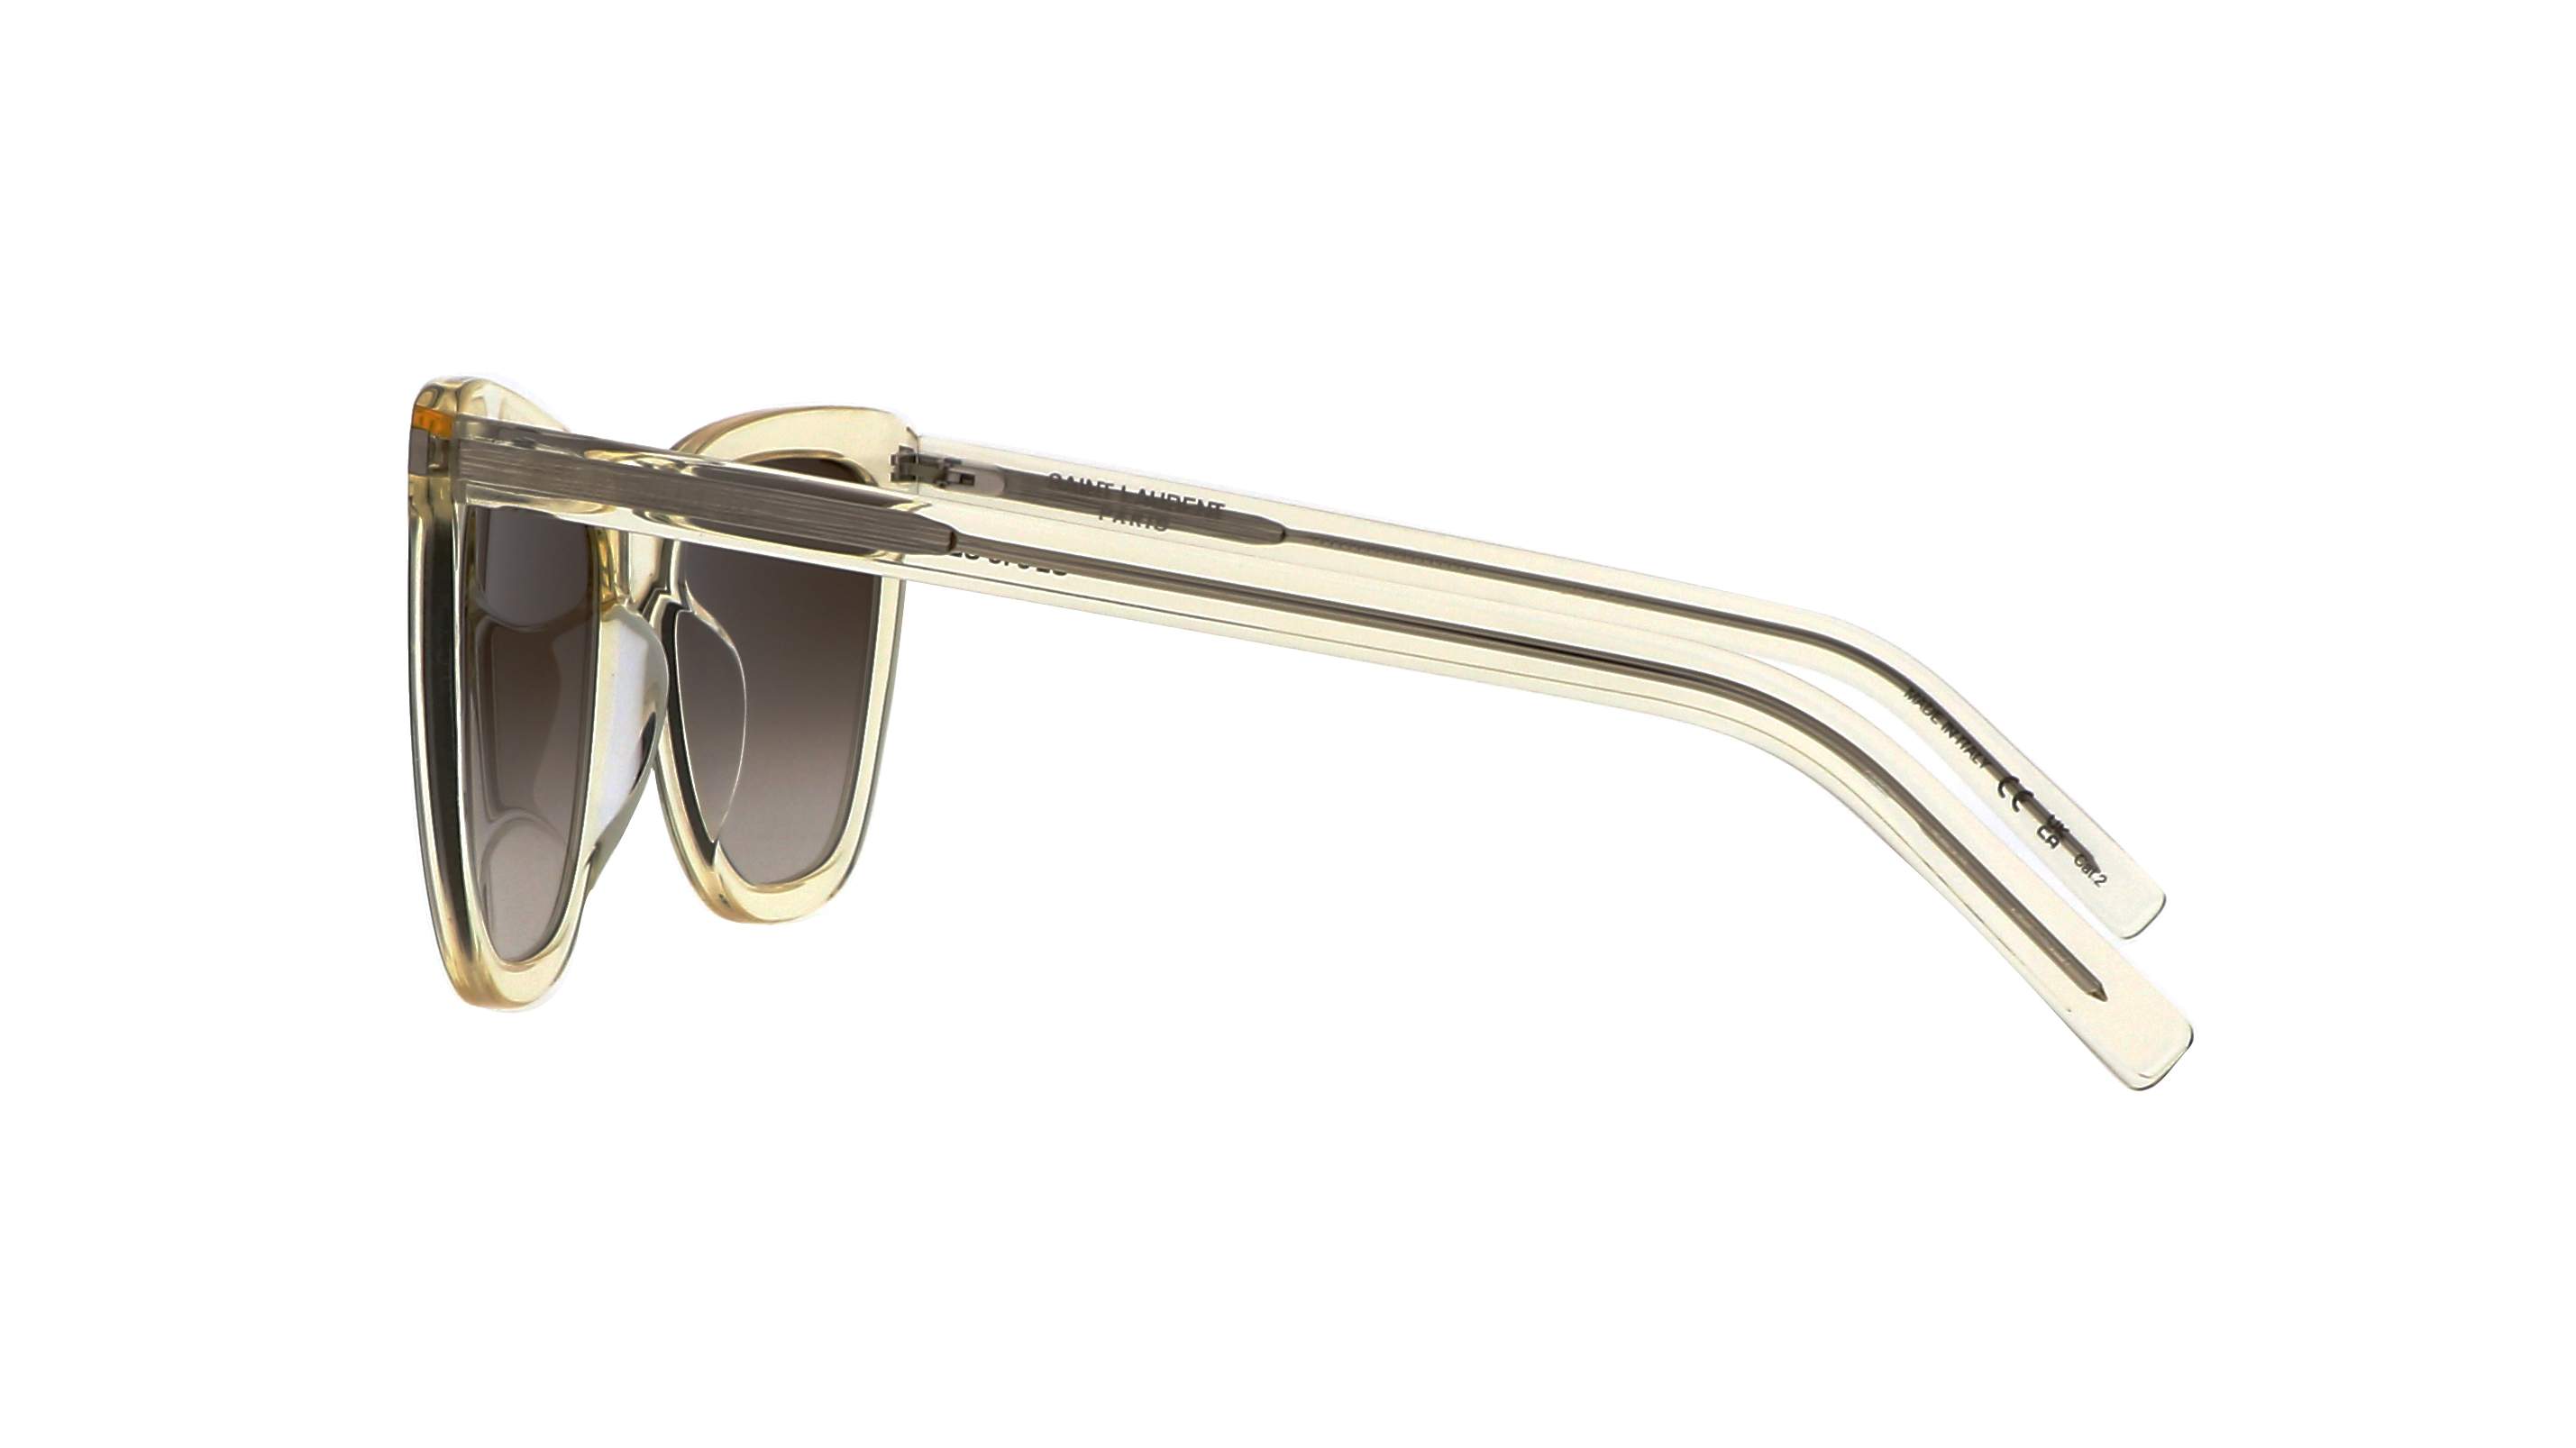 Sunglasses Saint Laurent Classic Sl 548 Slim 006 50 20 Yellow In Stock Price 17579